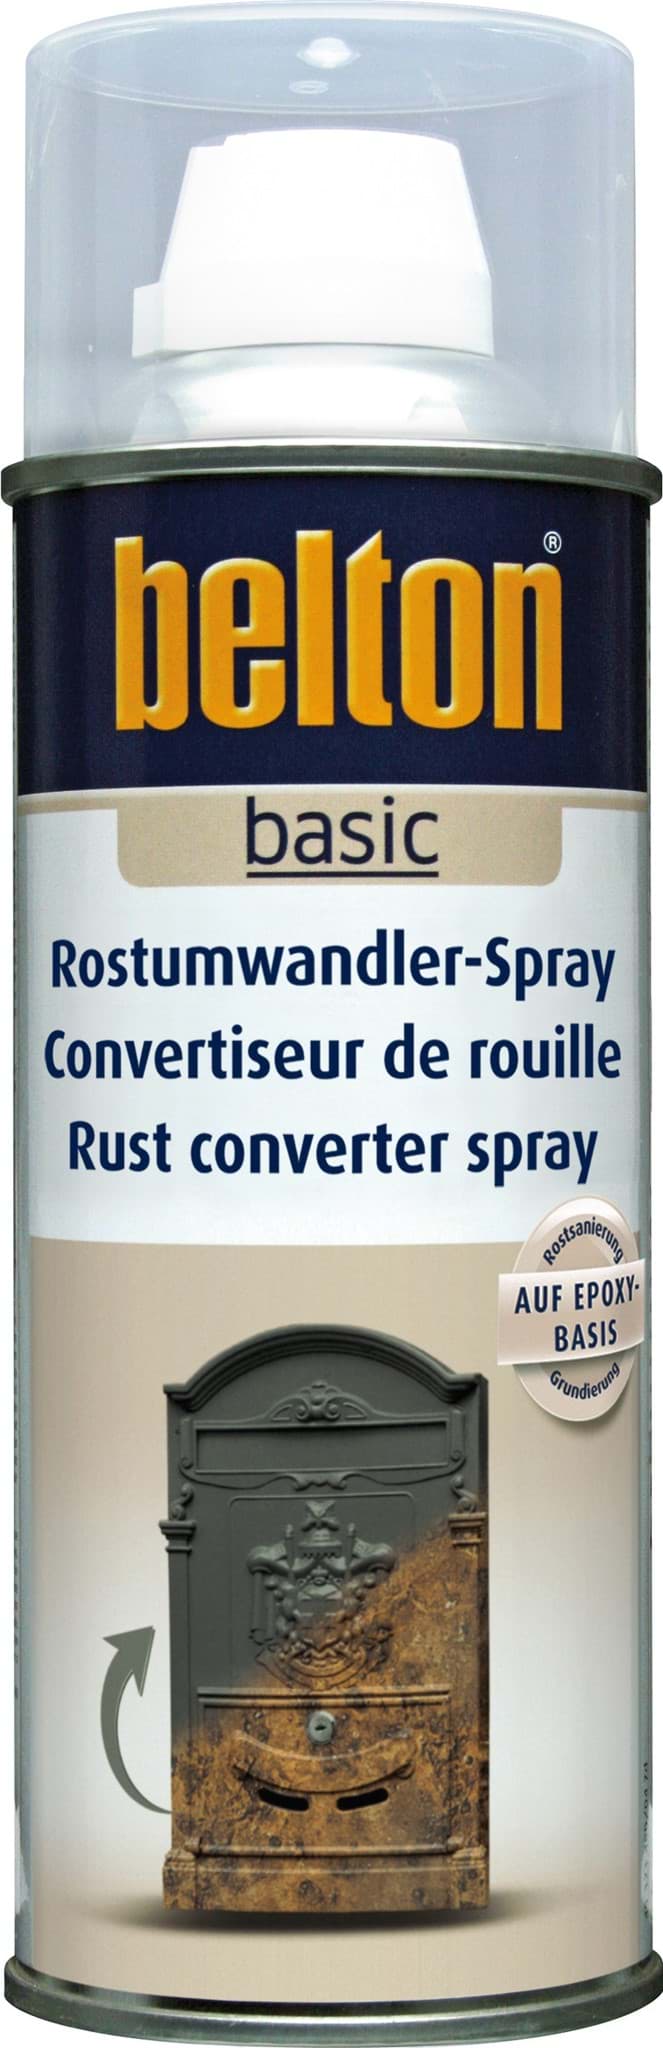 Picture of Belton basic Rostumwandler - Spray